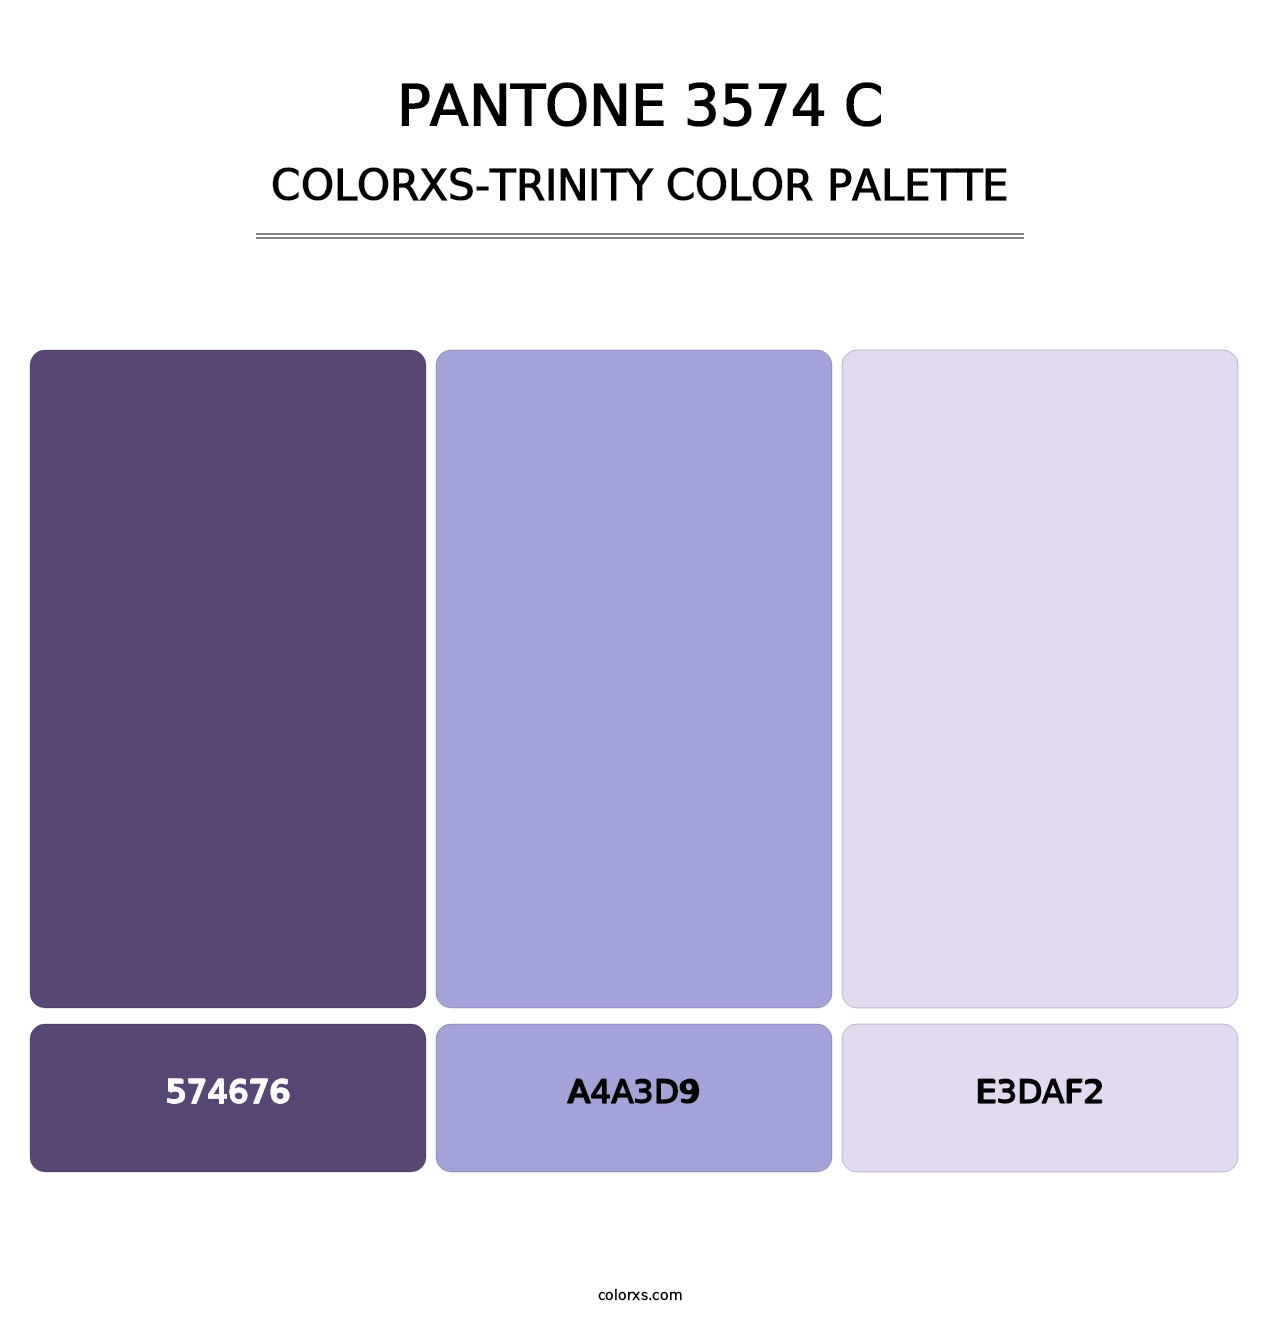 PANTONE 3574 C - Colorxs Trinity Palette